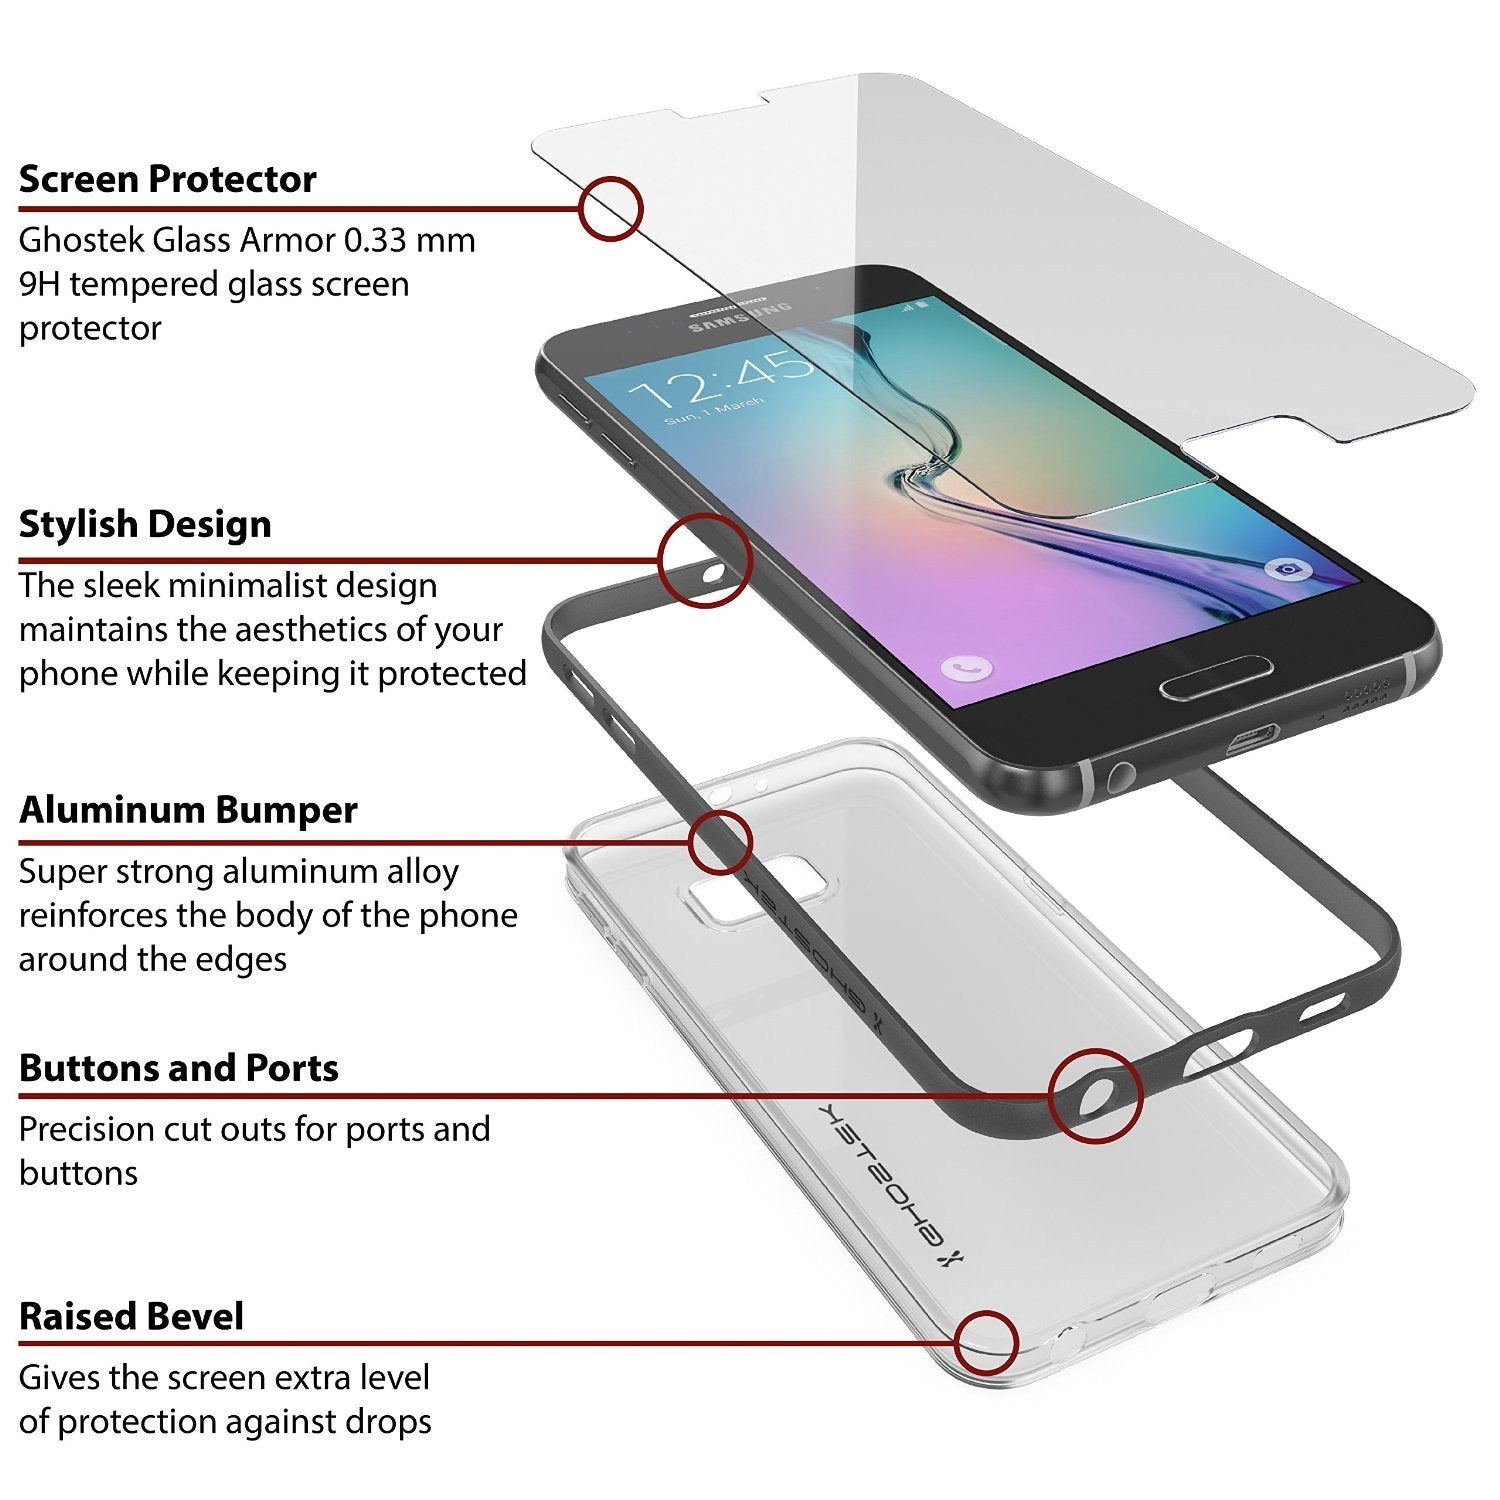 Galaxy S6 Case, Ghostek Cloak Series Black Slim Premium Protective Hybrid Impact Glass Armor